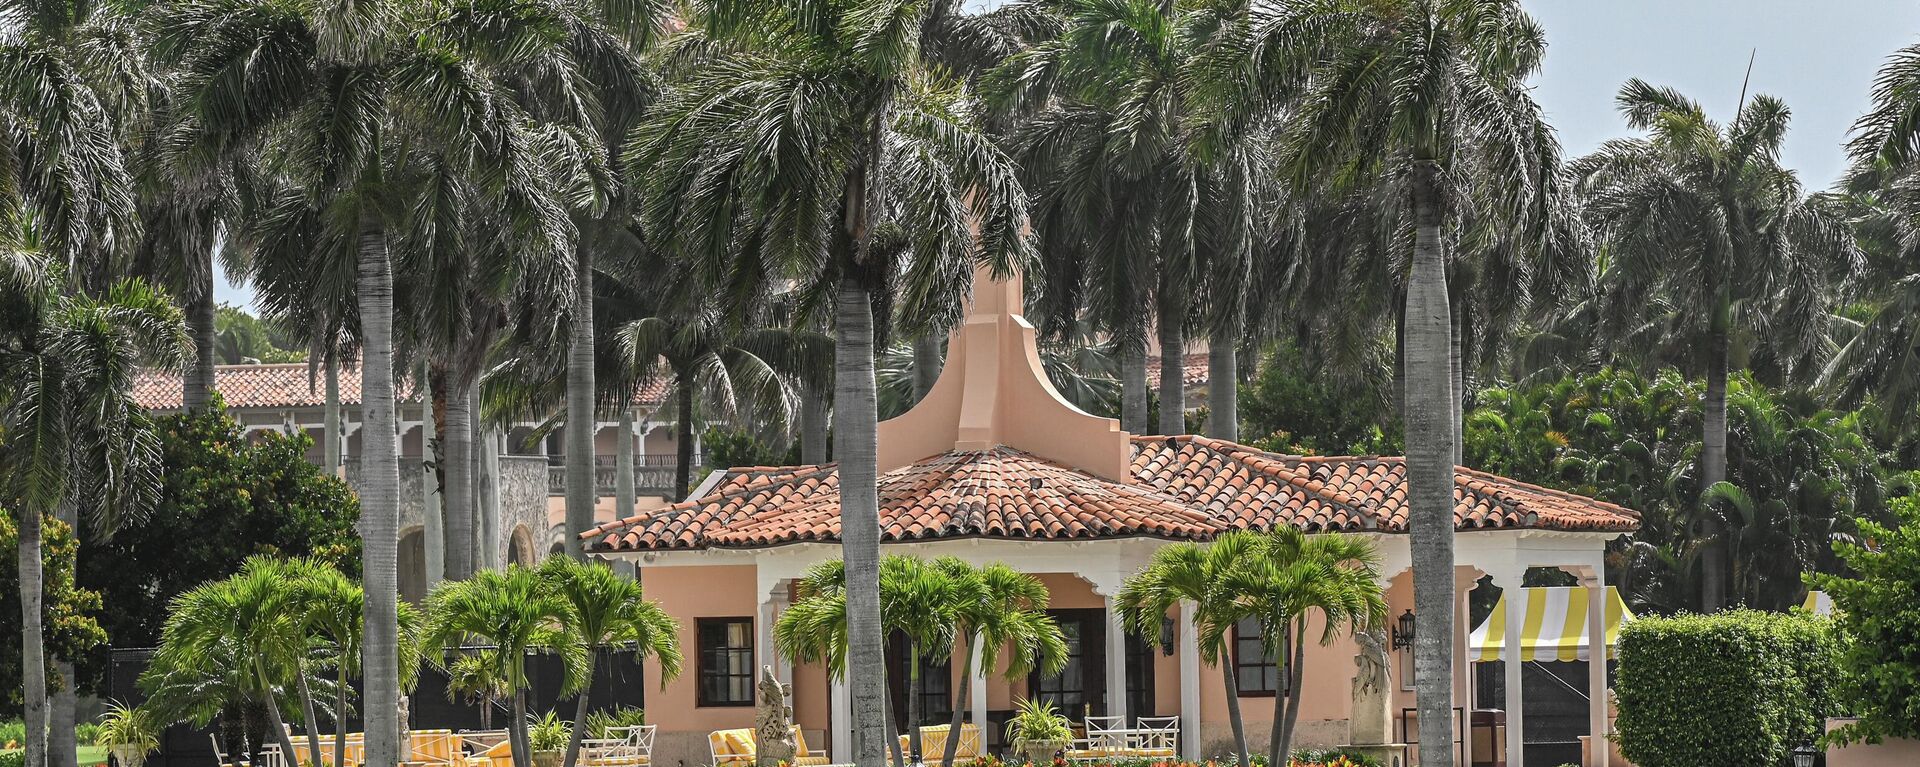 Former US President Donald Trump's residence in Mar-A-Lago, Palm Beach, Florida on August 9, 2022.  - Sputnik International, 1920, 22.08.2022